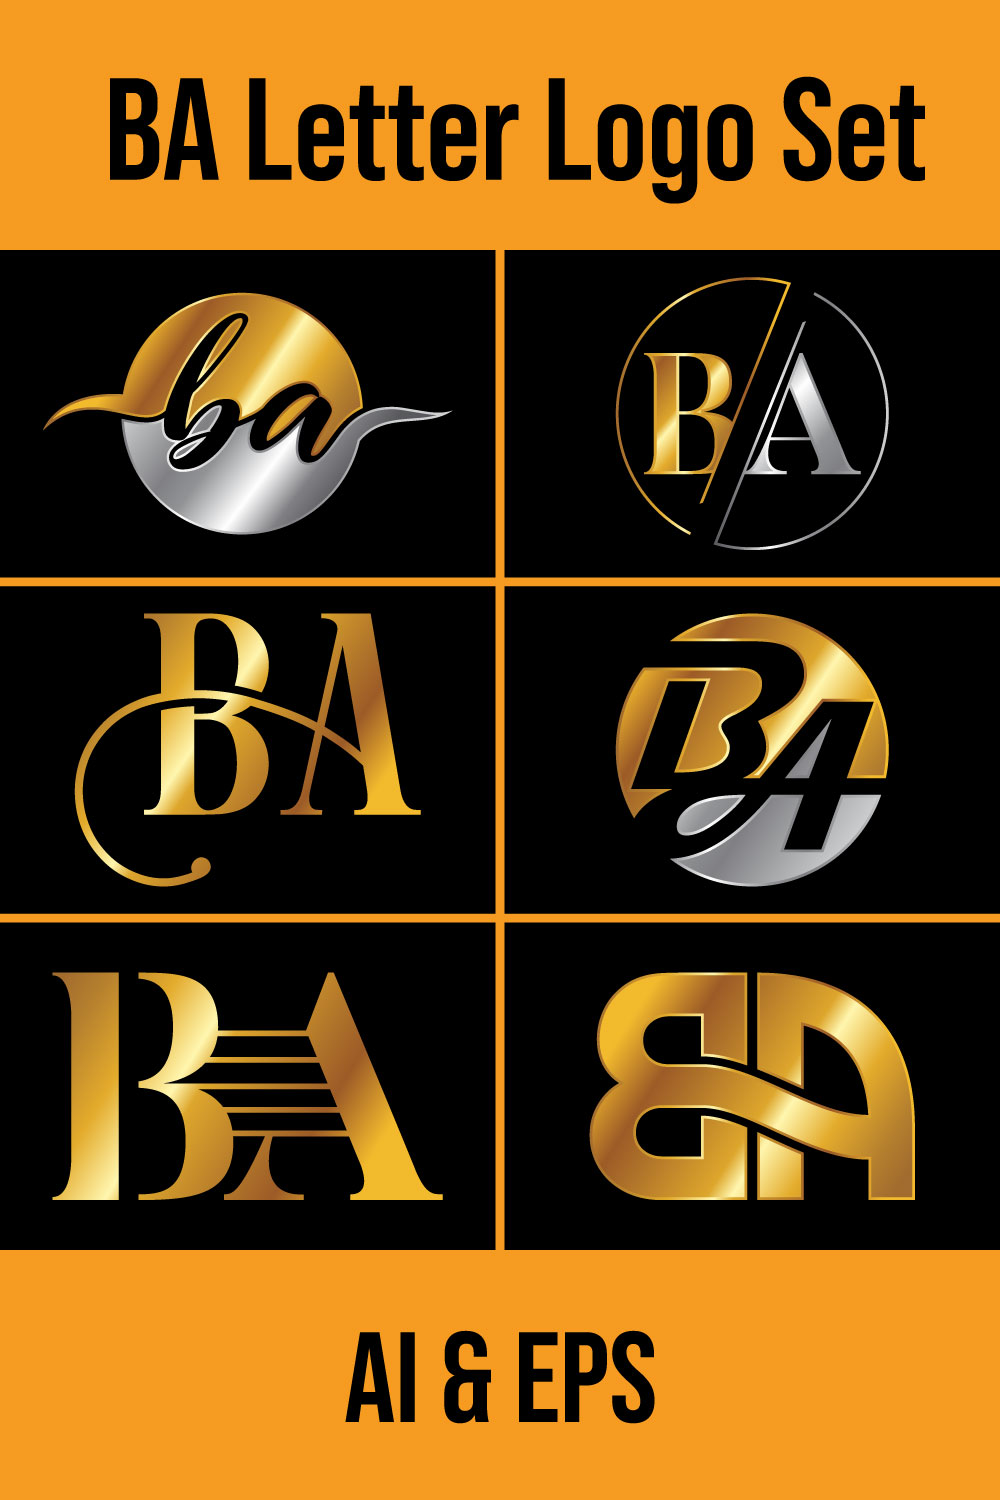 B A Logo Stock Vector Illustration and Royalty Free B A Logo Clipart